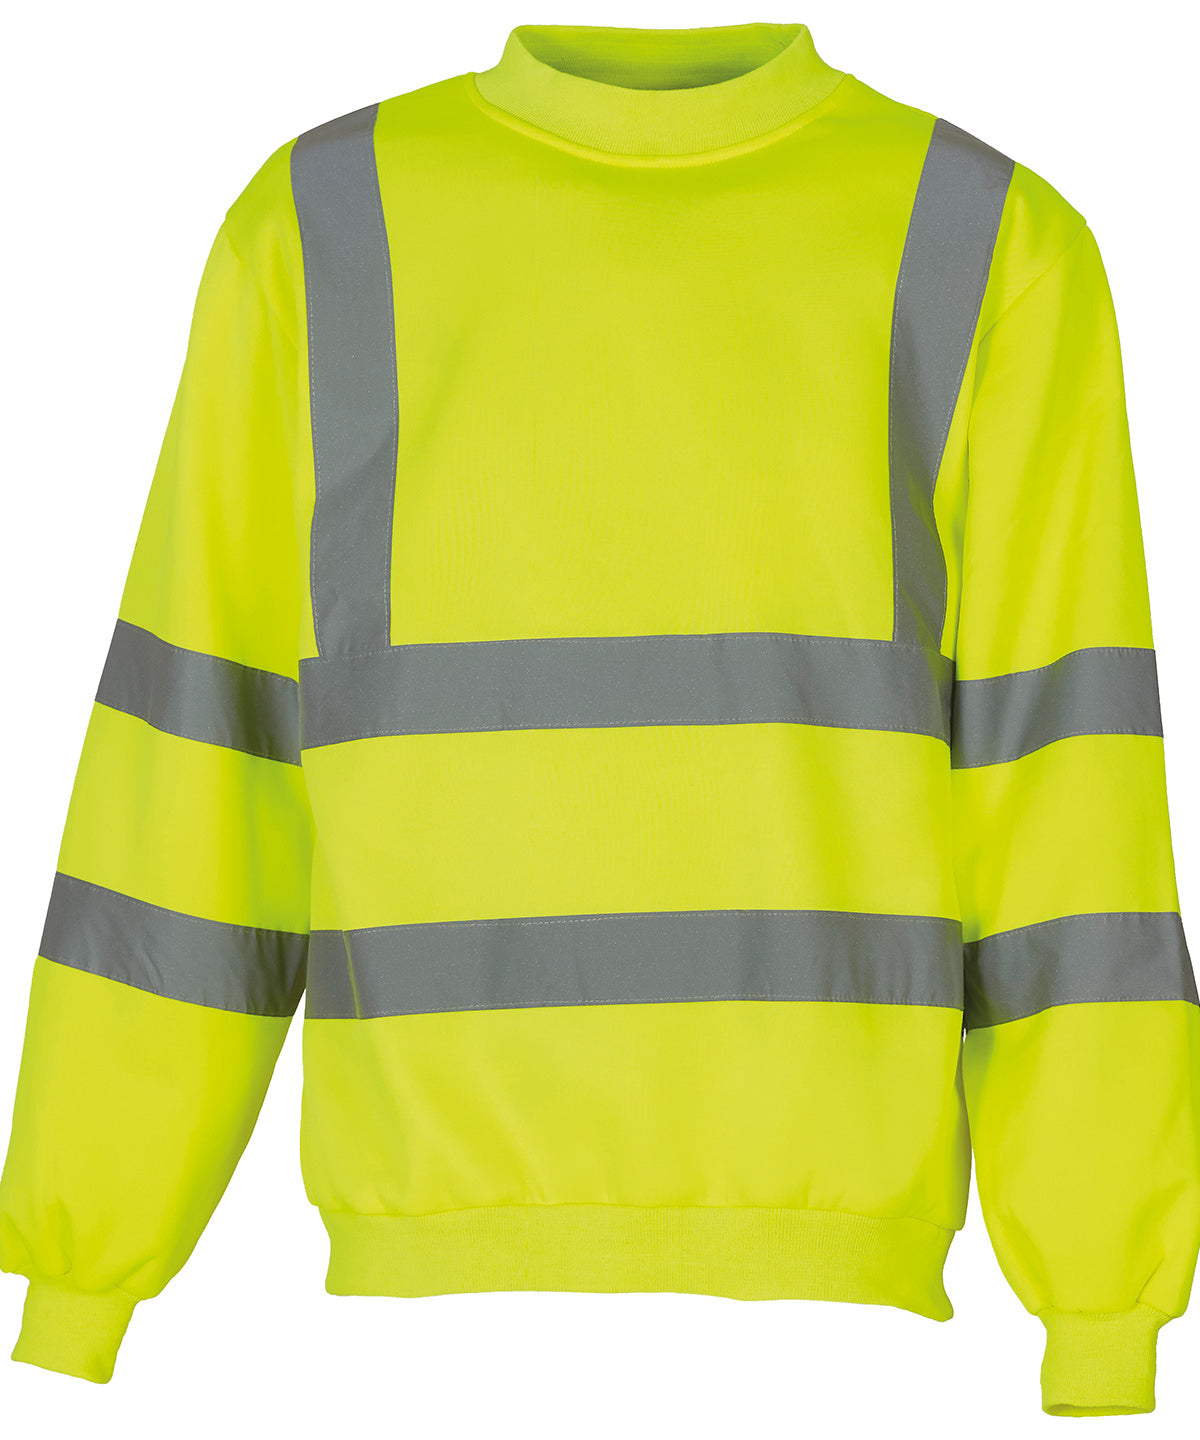 Yellow - Hi-vis sweatshirt (HVJ510) Sweatshirts Yoko Must Haves, New Colours for 2021, Plus Sizes, Safetywear, Sweatshirts, Workwear Schoolwear Centres